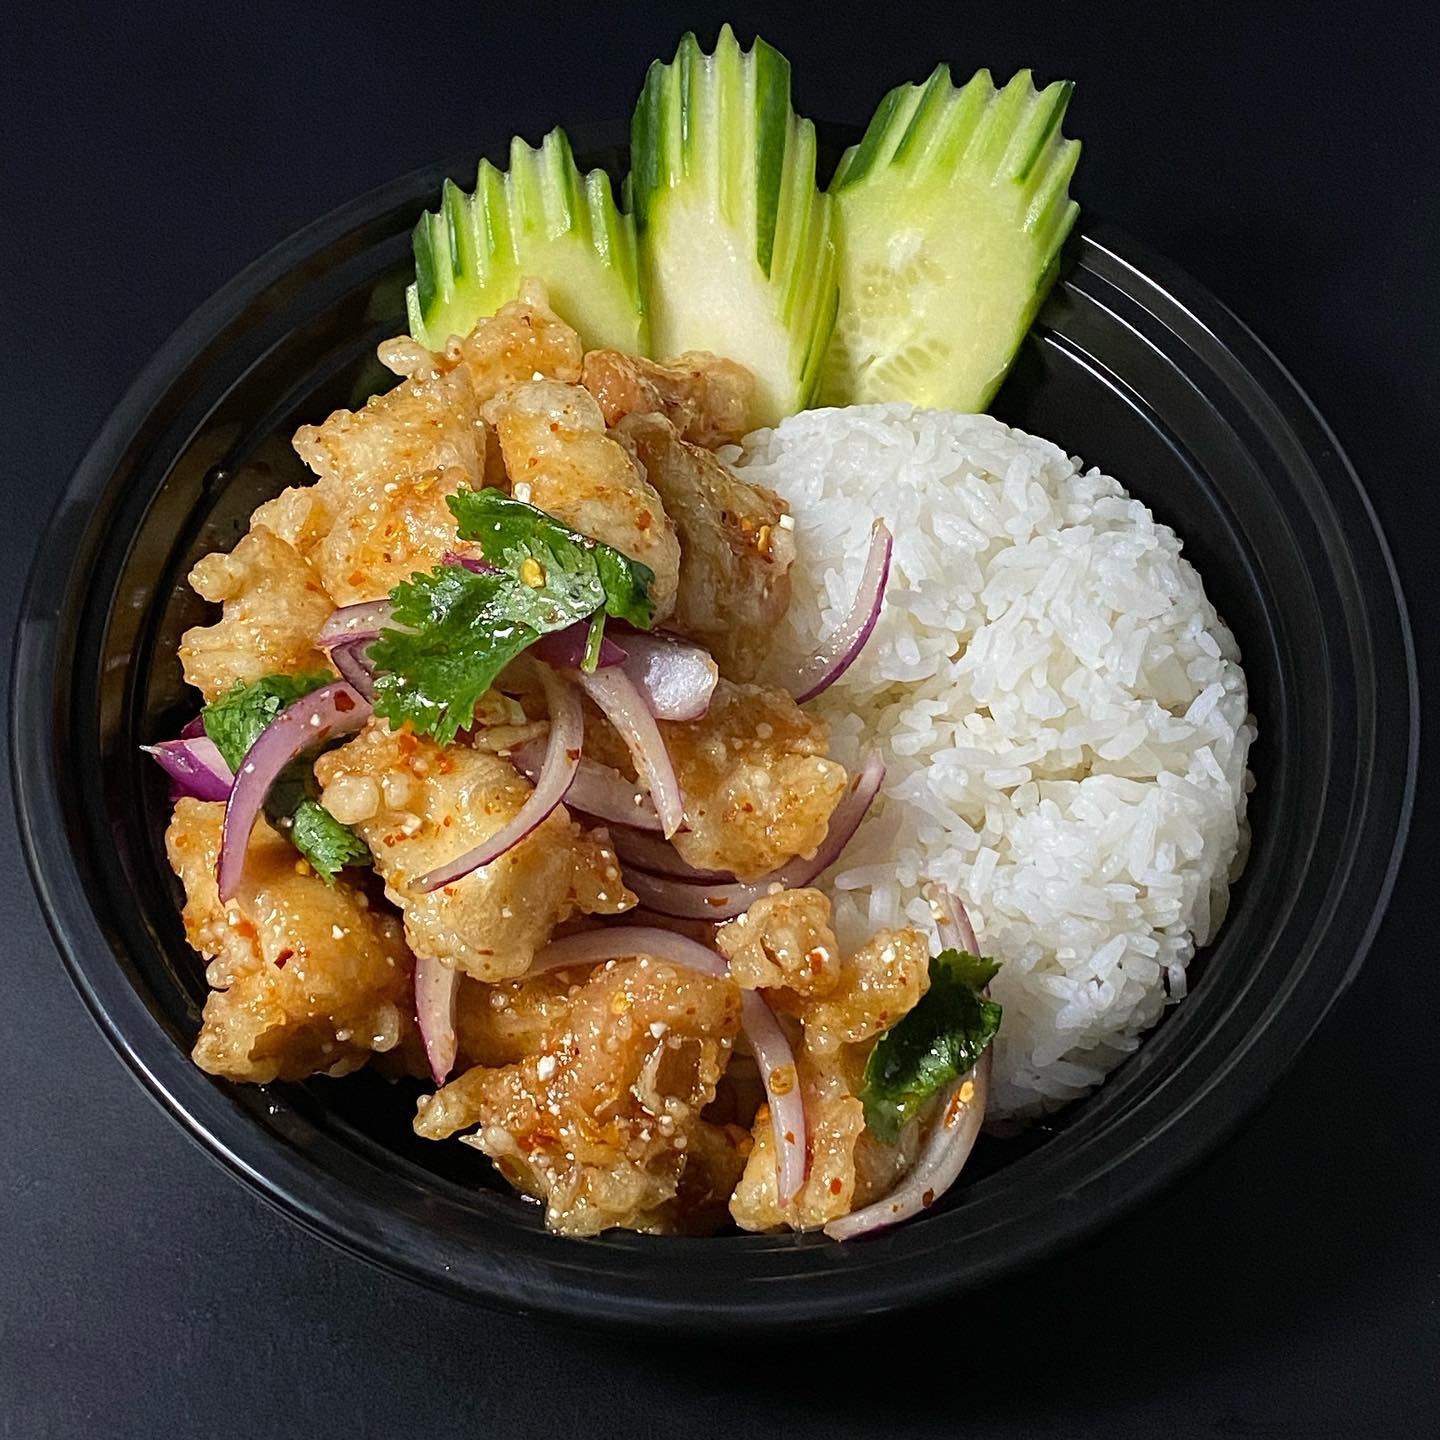 Food Truck: Over Rice Thai